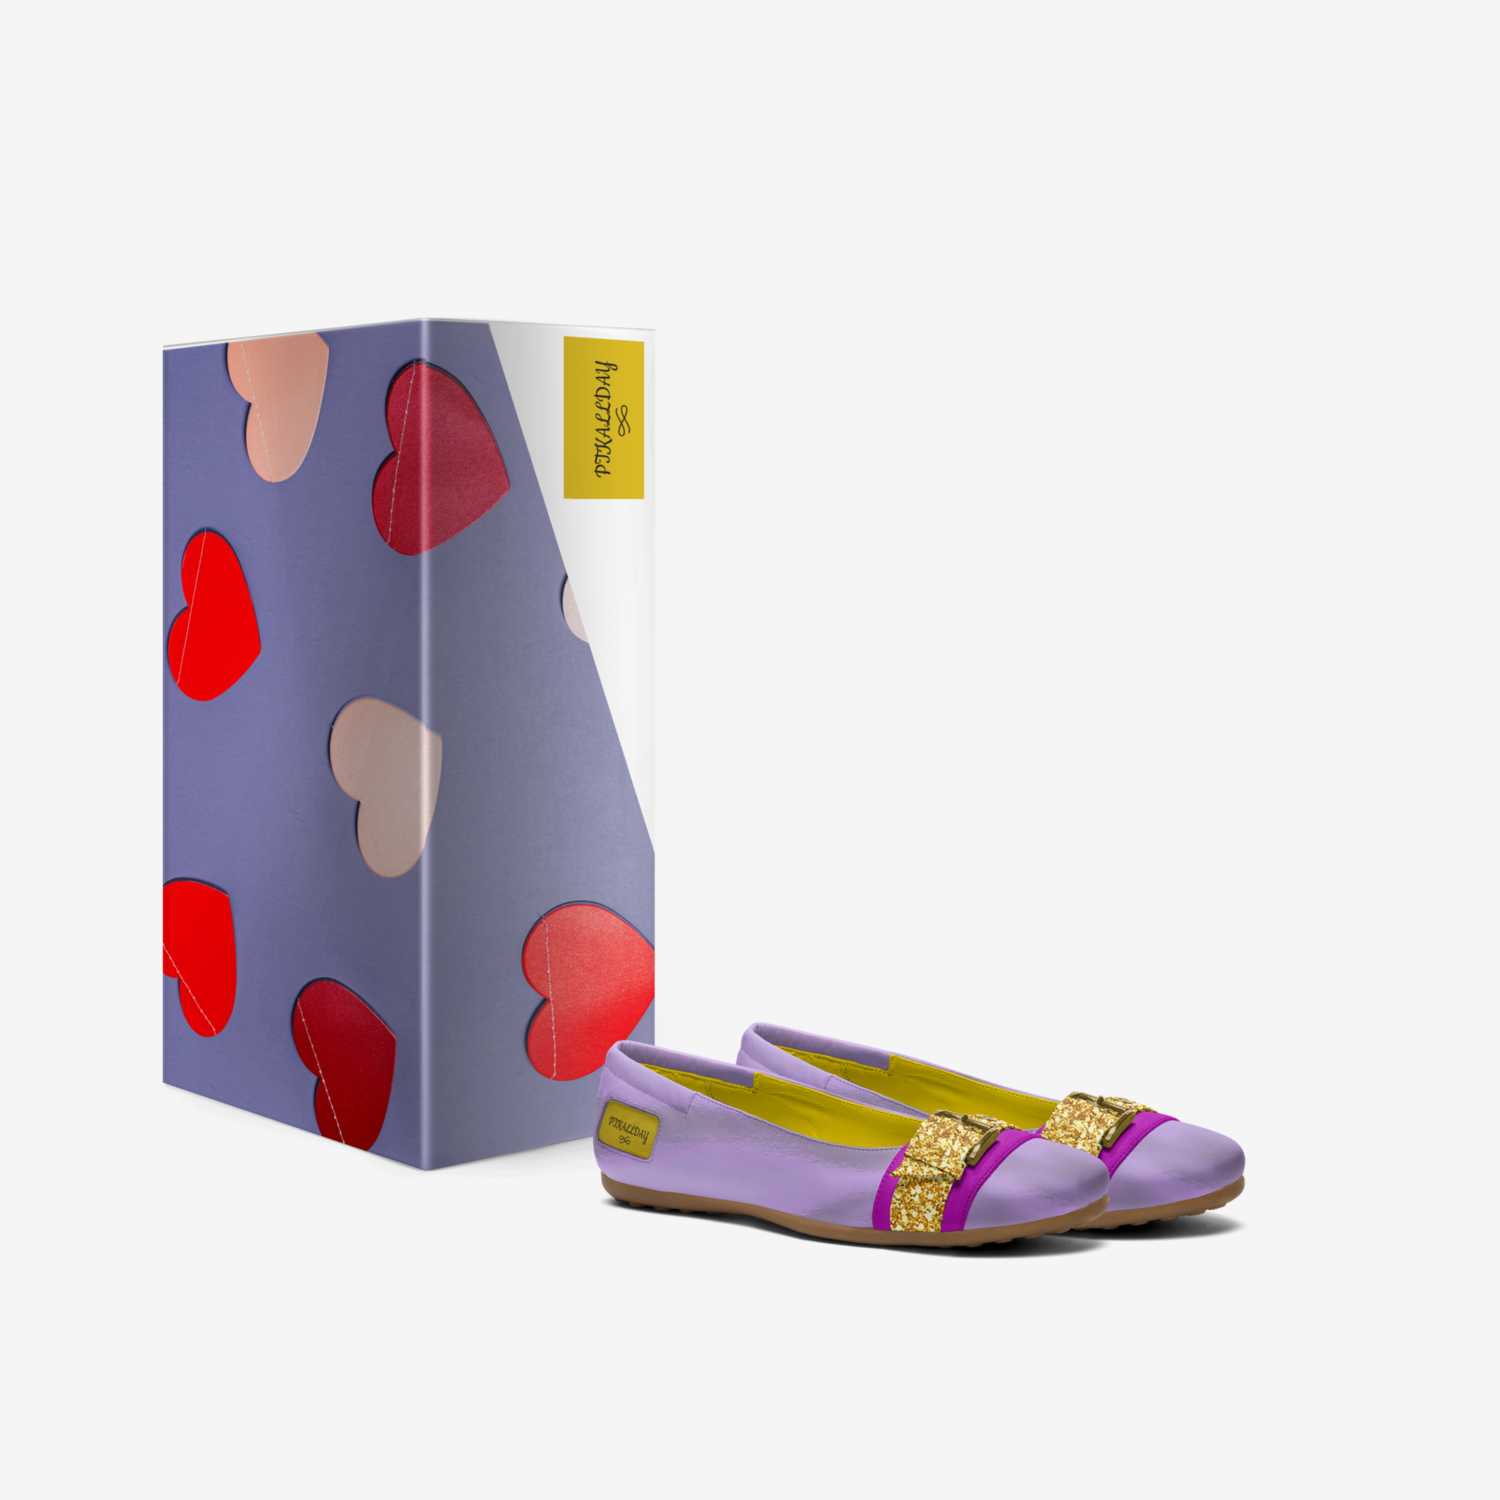 PTKALLDAY custom made in Italy shoes by Charmaine Betty-singleton | Box view